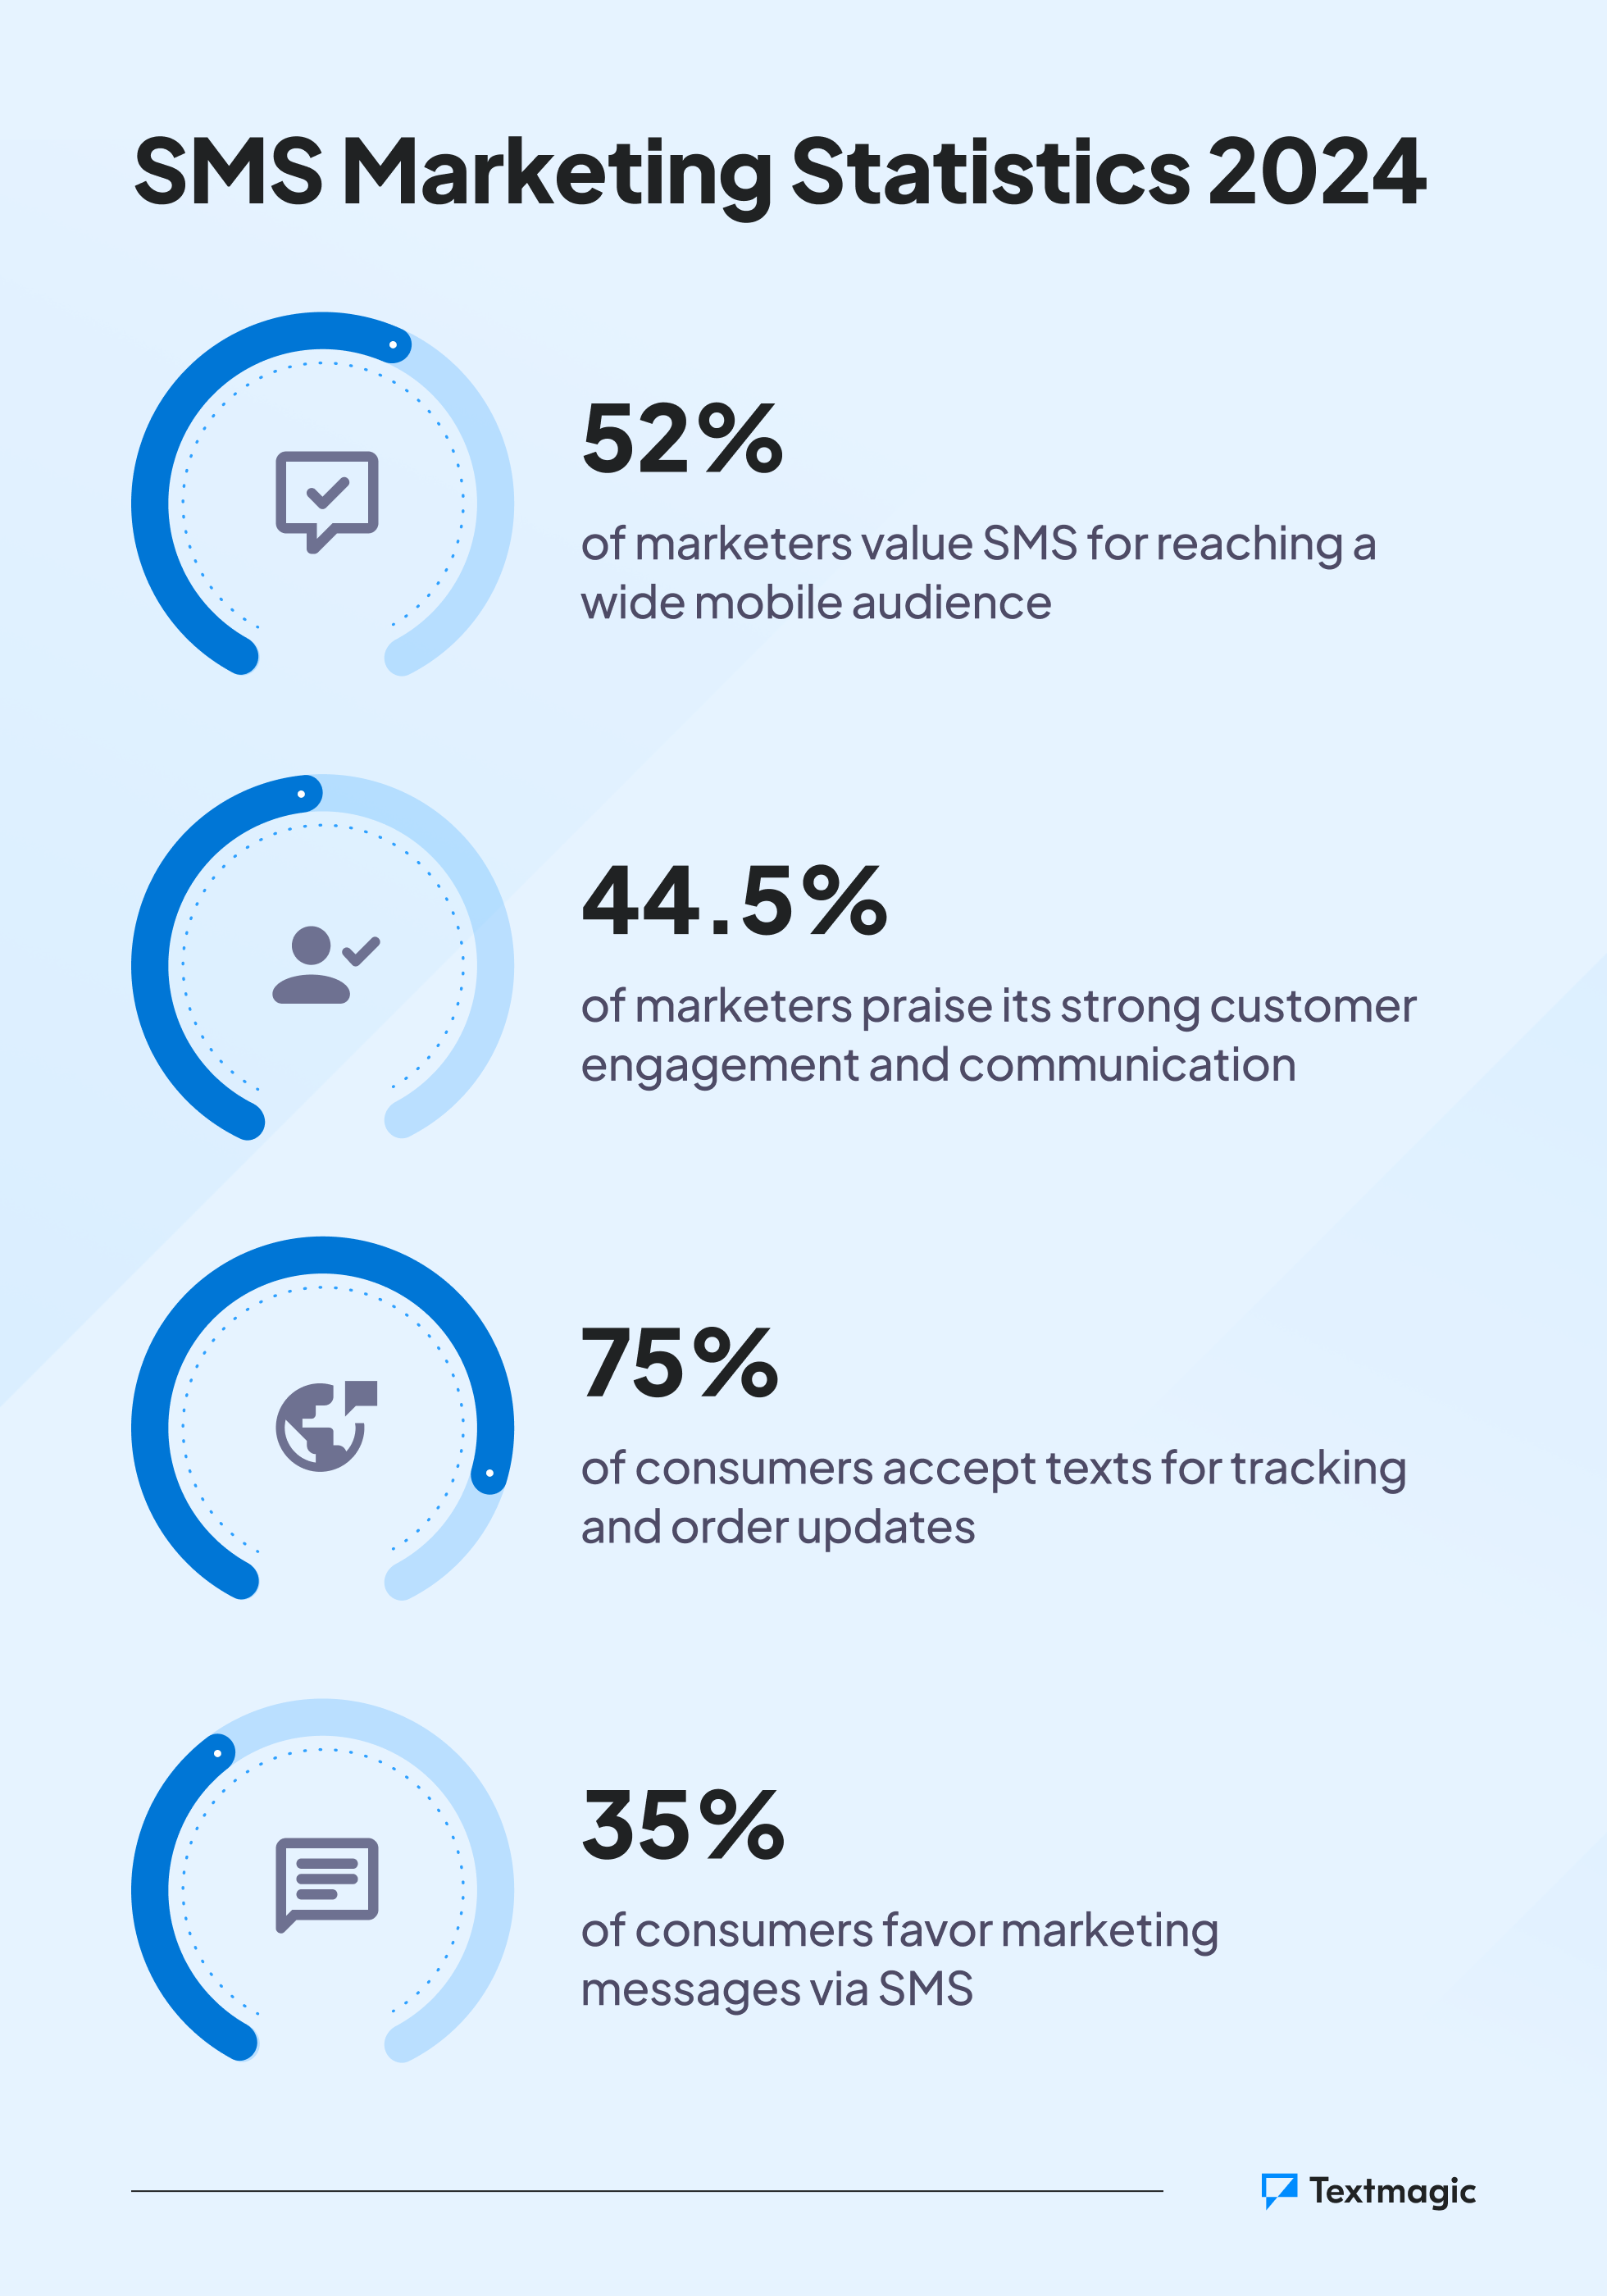 image depicting 2024 SMS marketing stats